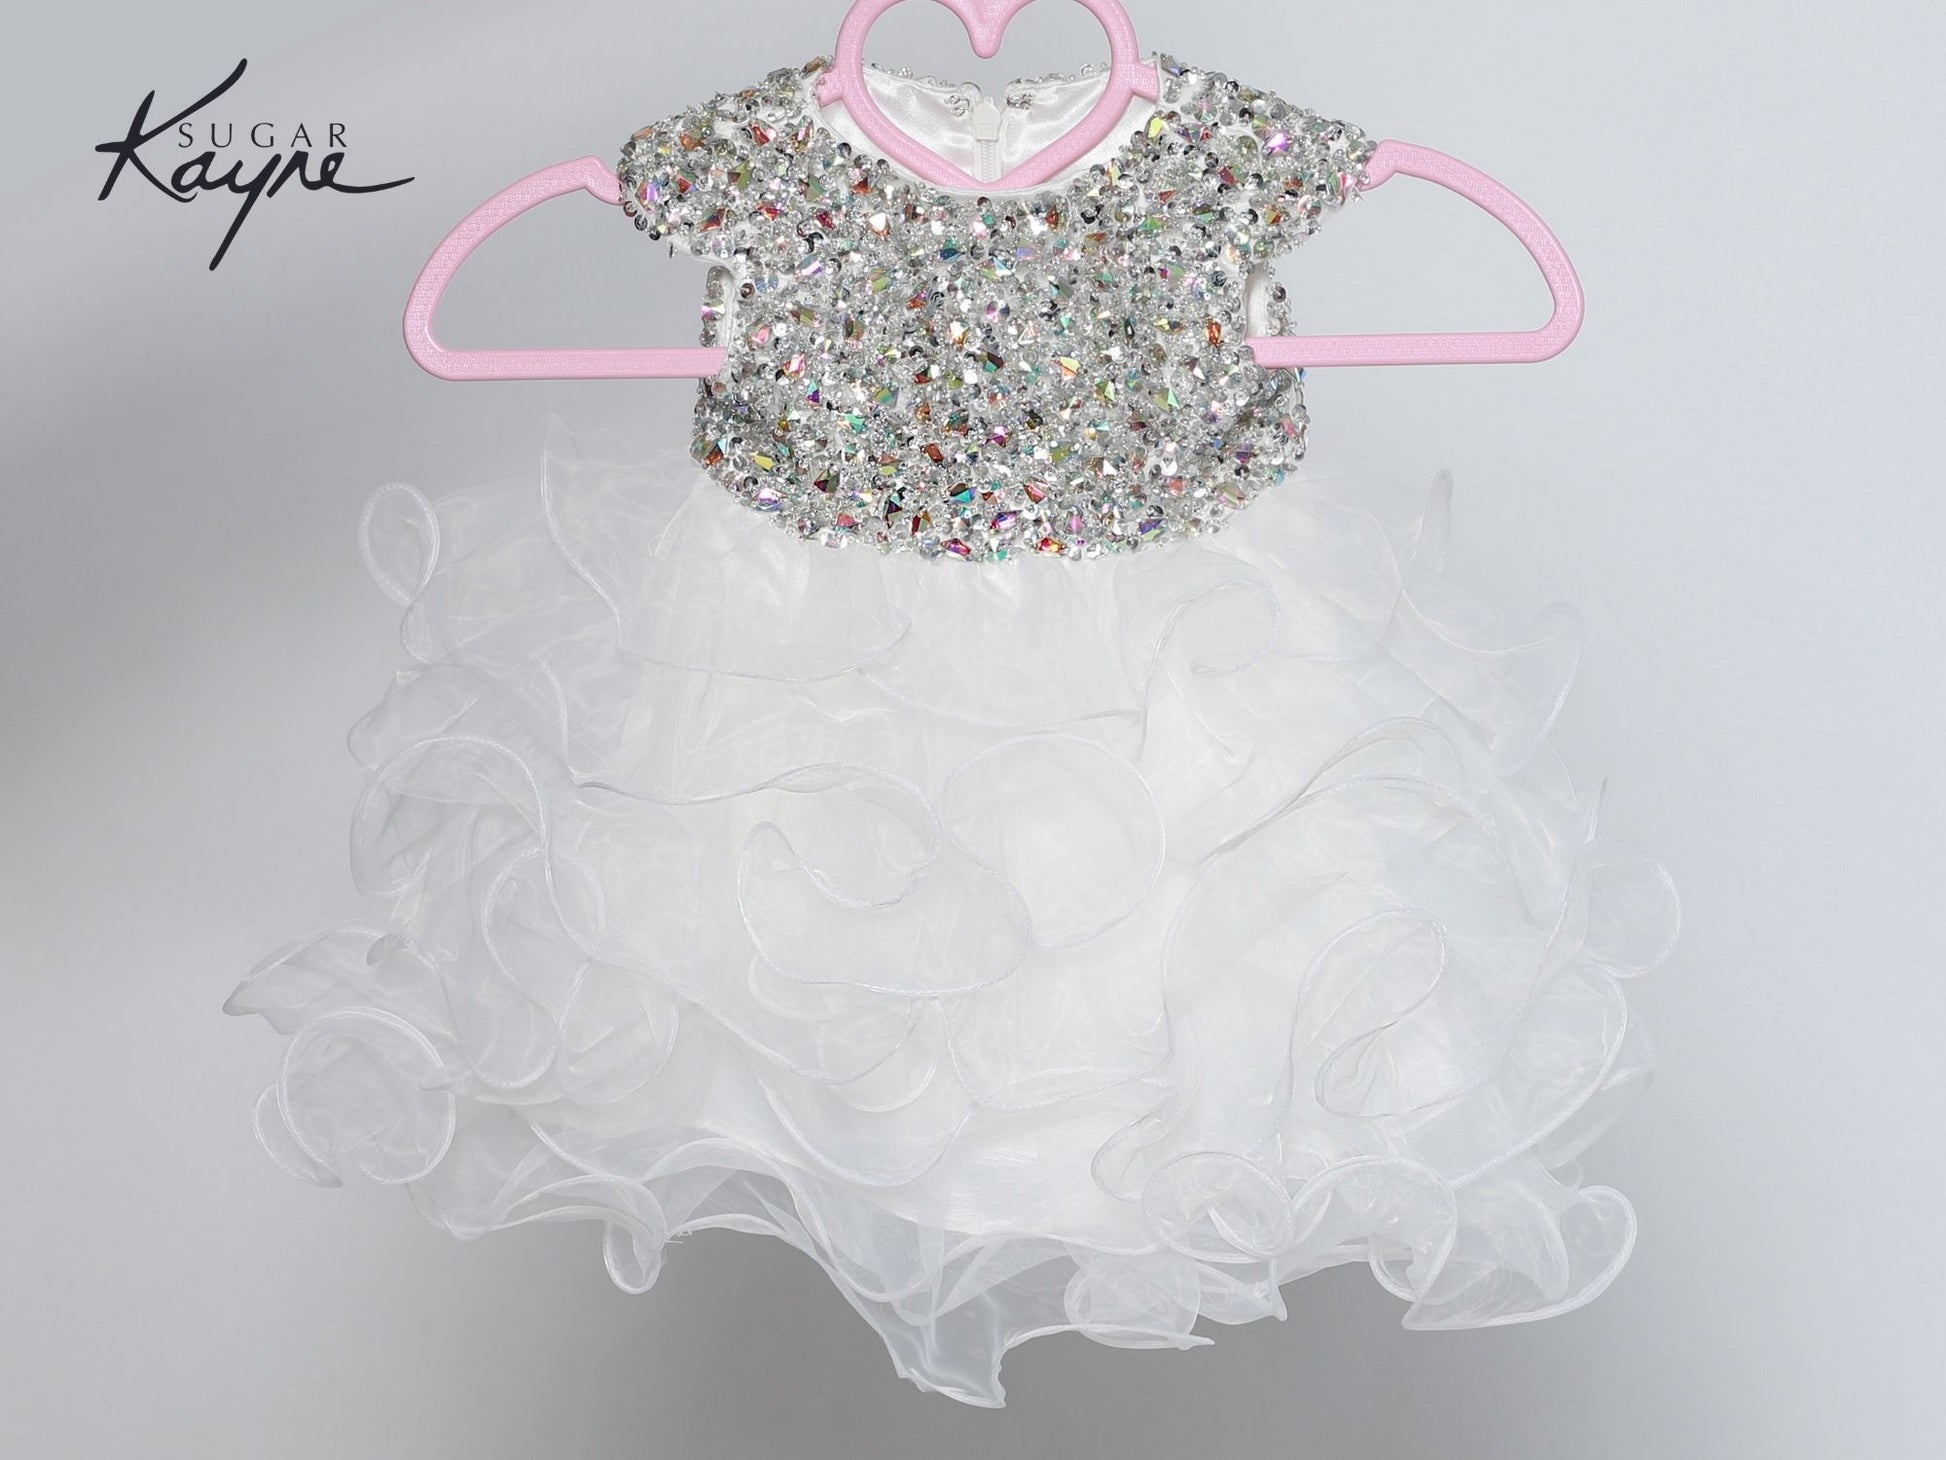 Sugar Kayne C201 Girls Ruffle Cupcake Pageant Dress Crystal Bodice Cap Sleeve Gown   Sizes: 0M, 6M, 12M, 18M, 24M, 2T, 3T, 4T, 5T, 6T  Colors: Turquoise, White, Bubblegum